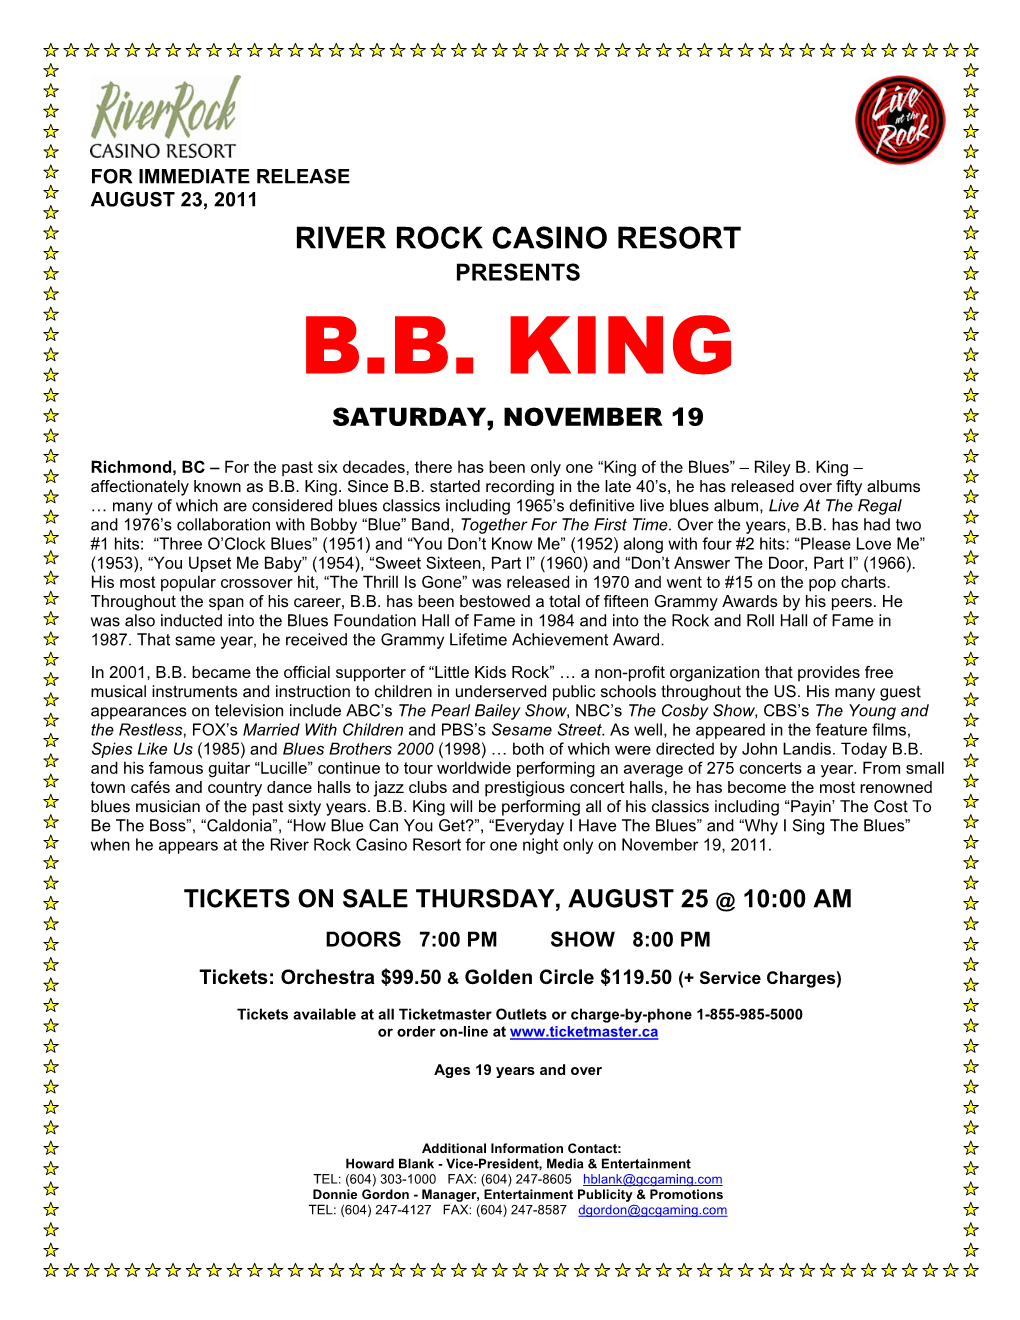 B.B. King Saturday, November 19